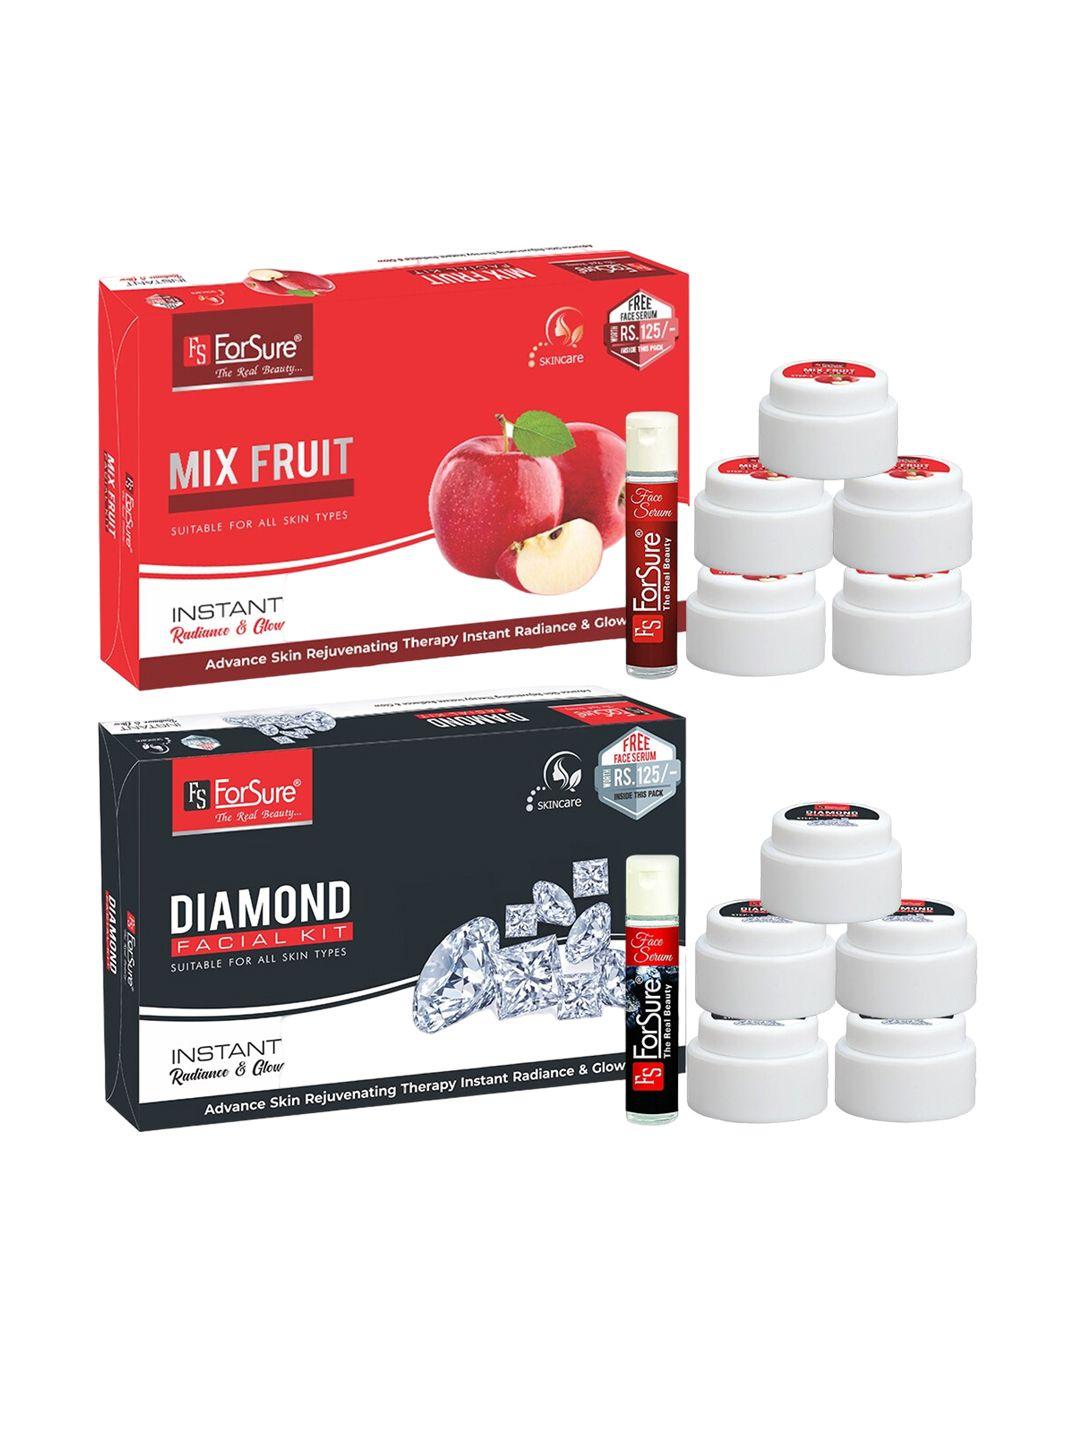 forsure set of mix fruit & diamond instant radiance & glow facial kit